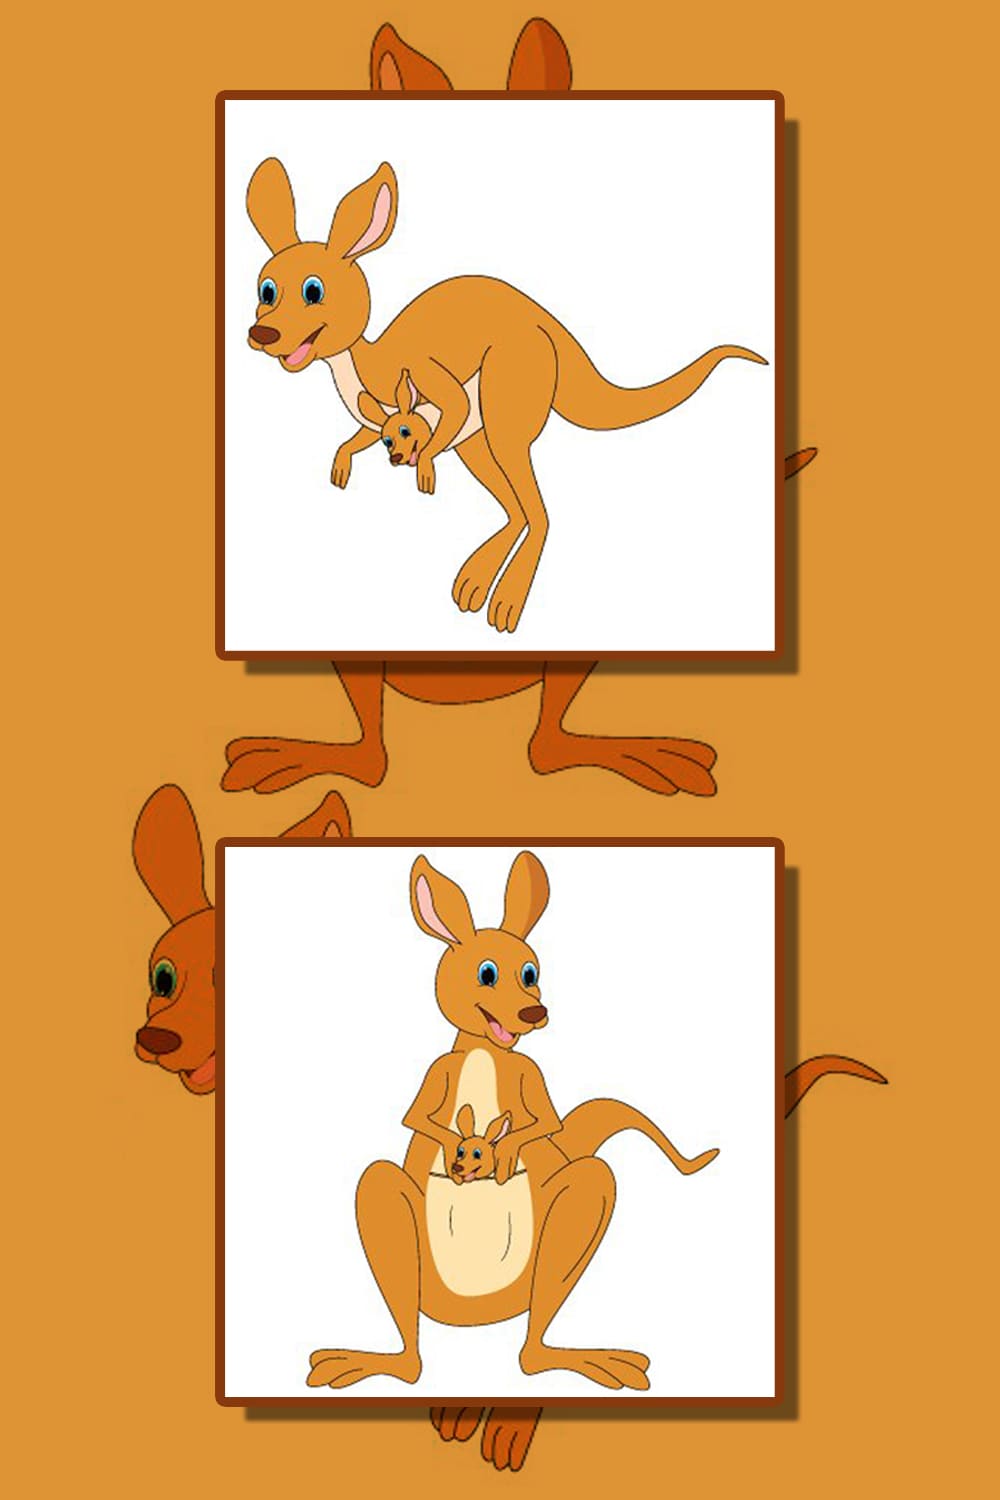 Cute Kangaroo Cartoon pinterest image.